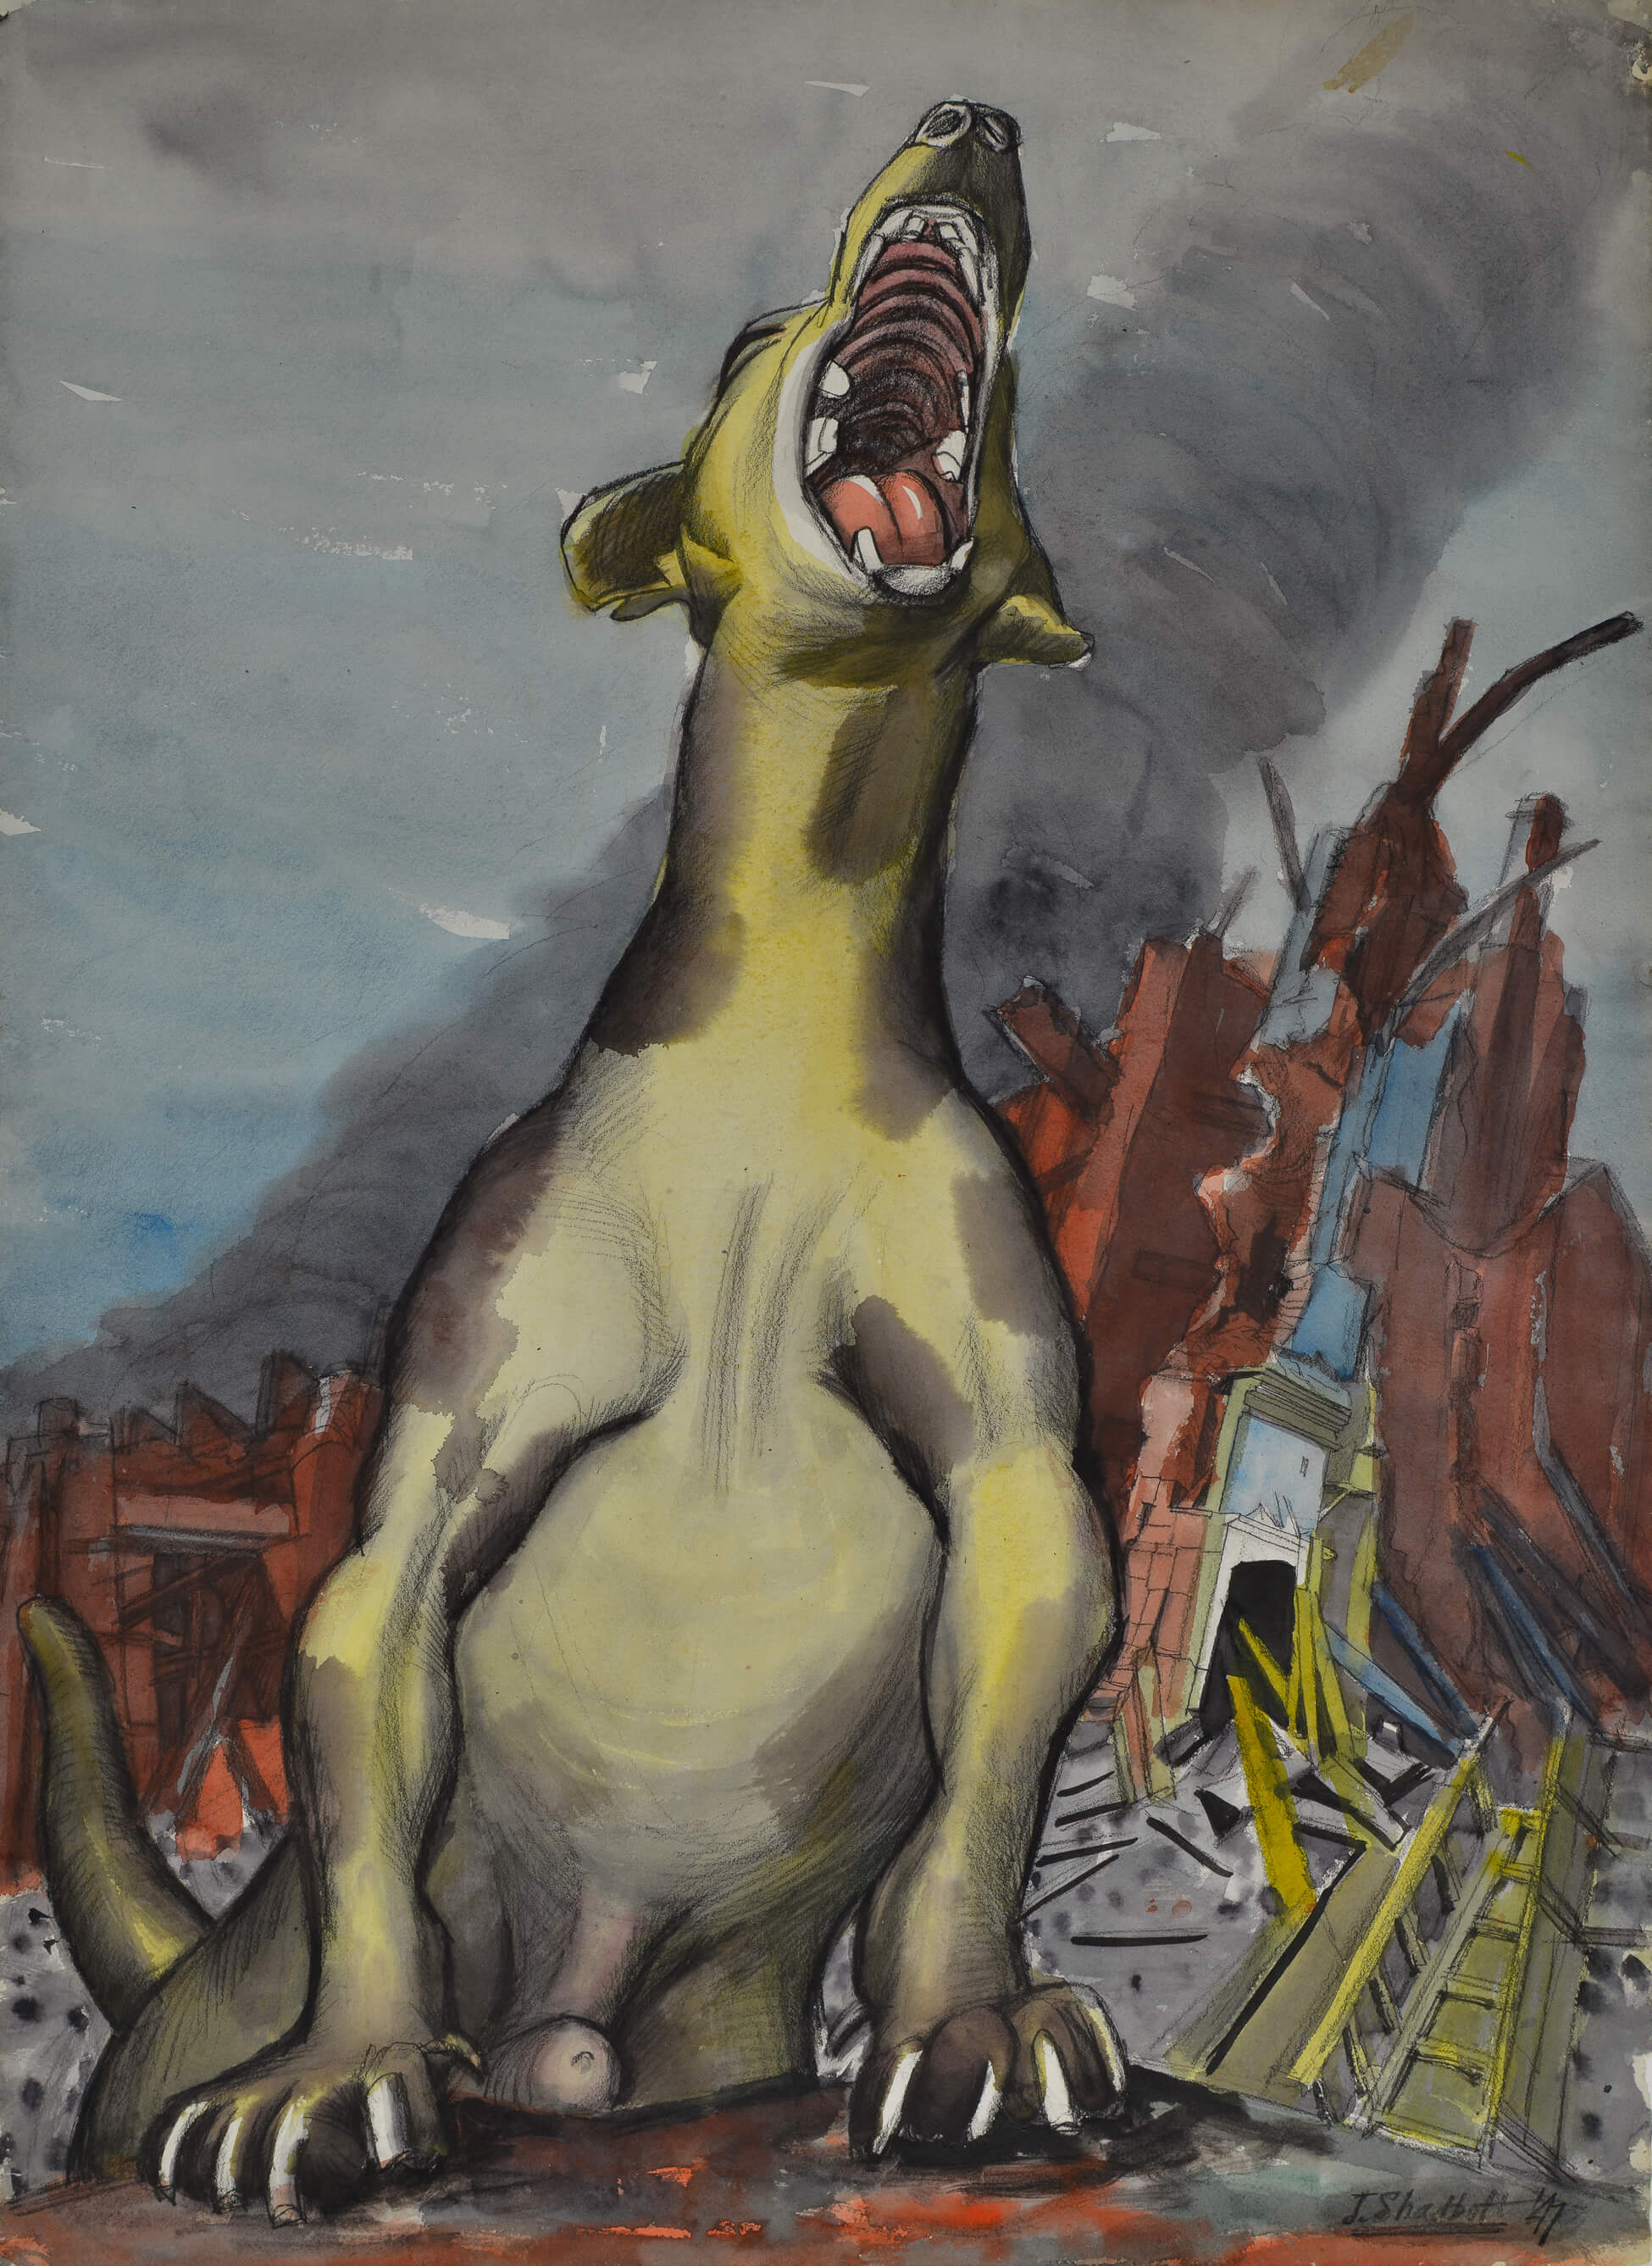 Art Canada Institute, Jack Shadbolt, Dog Among the Ruins, 1947